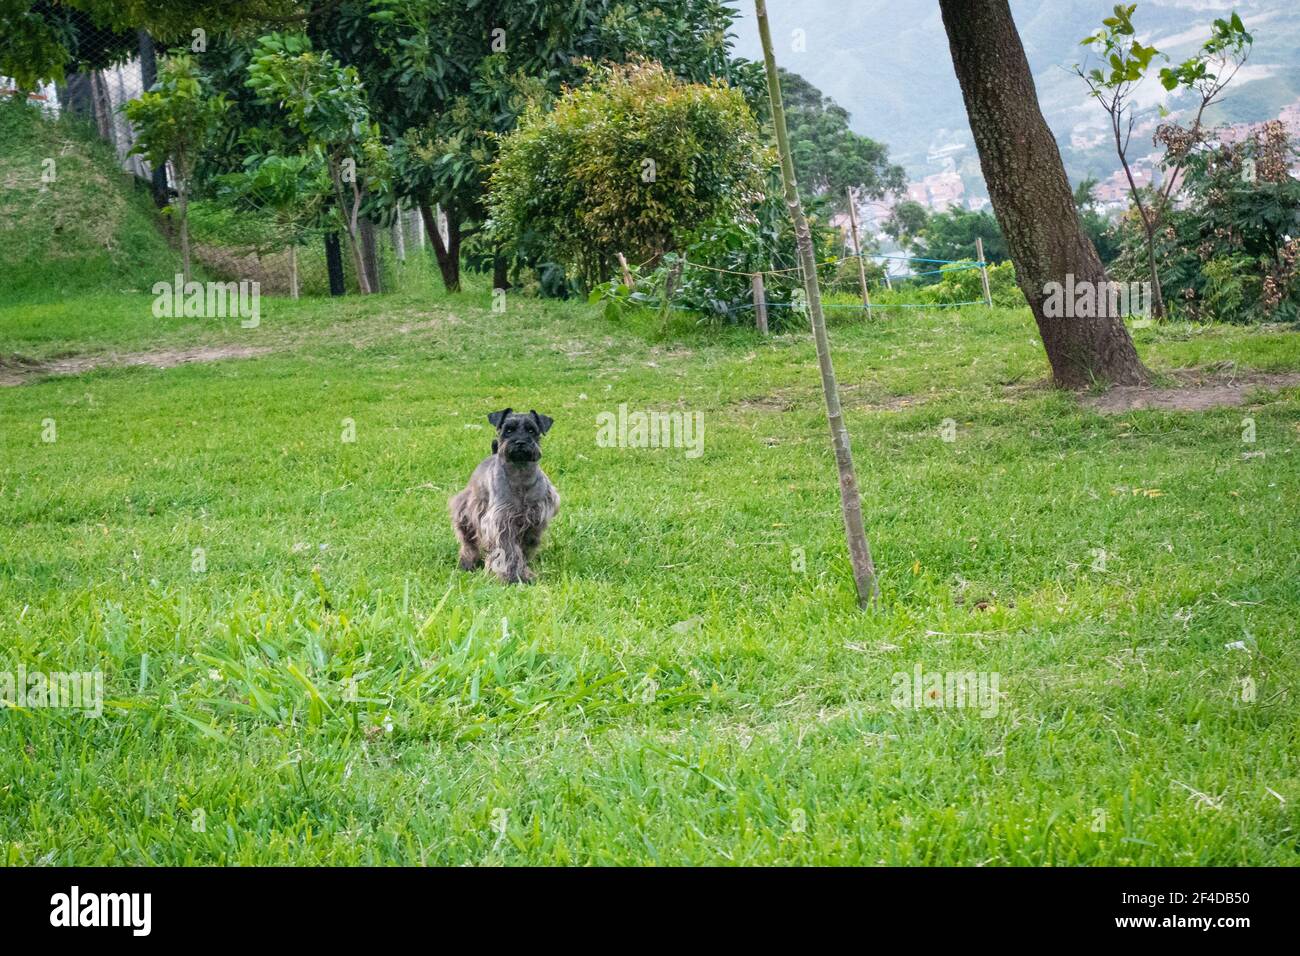 A Schnauzer, Small Gray Dog Walking Through a Grassy Park Stock Photo